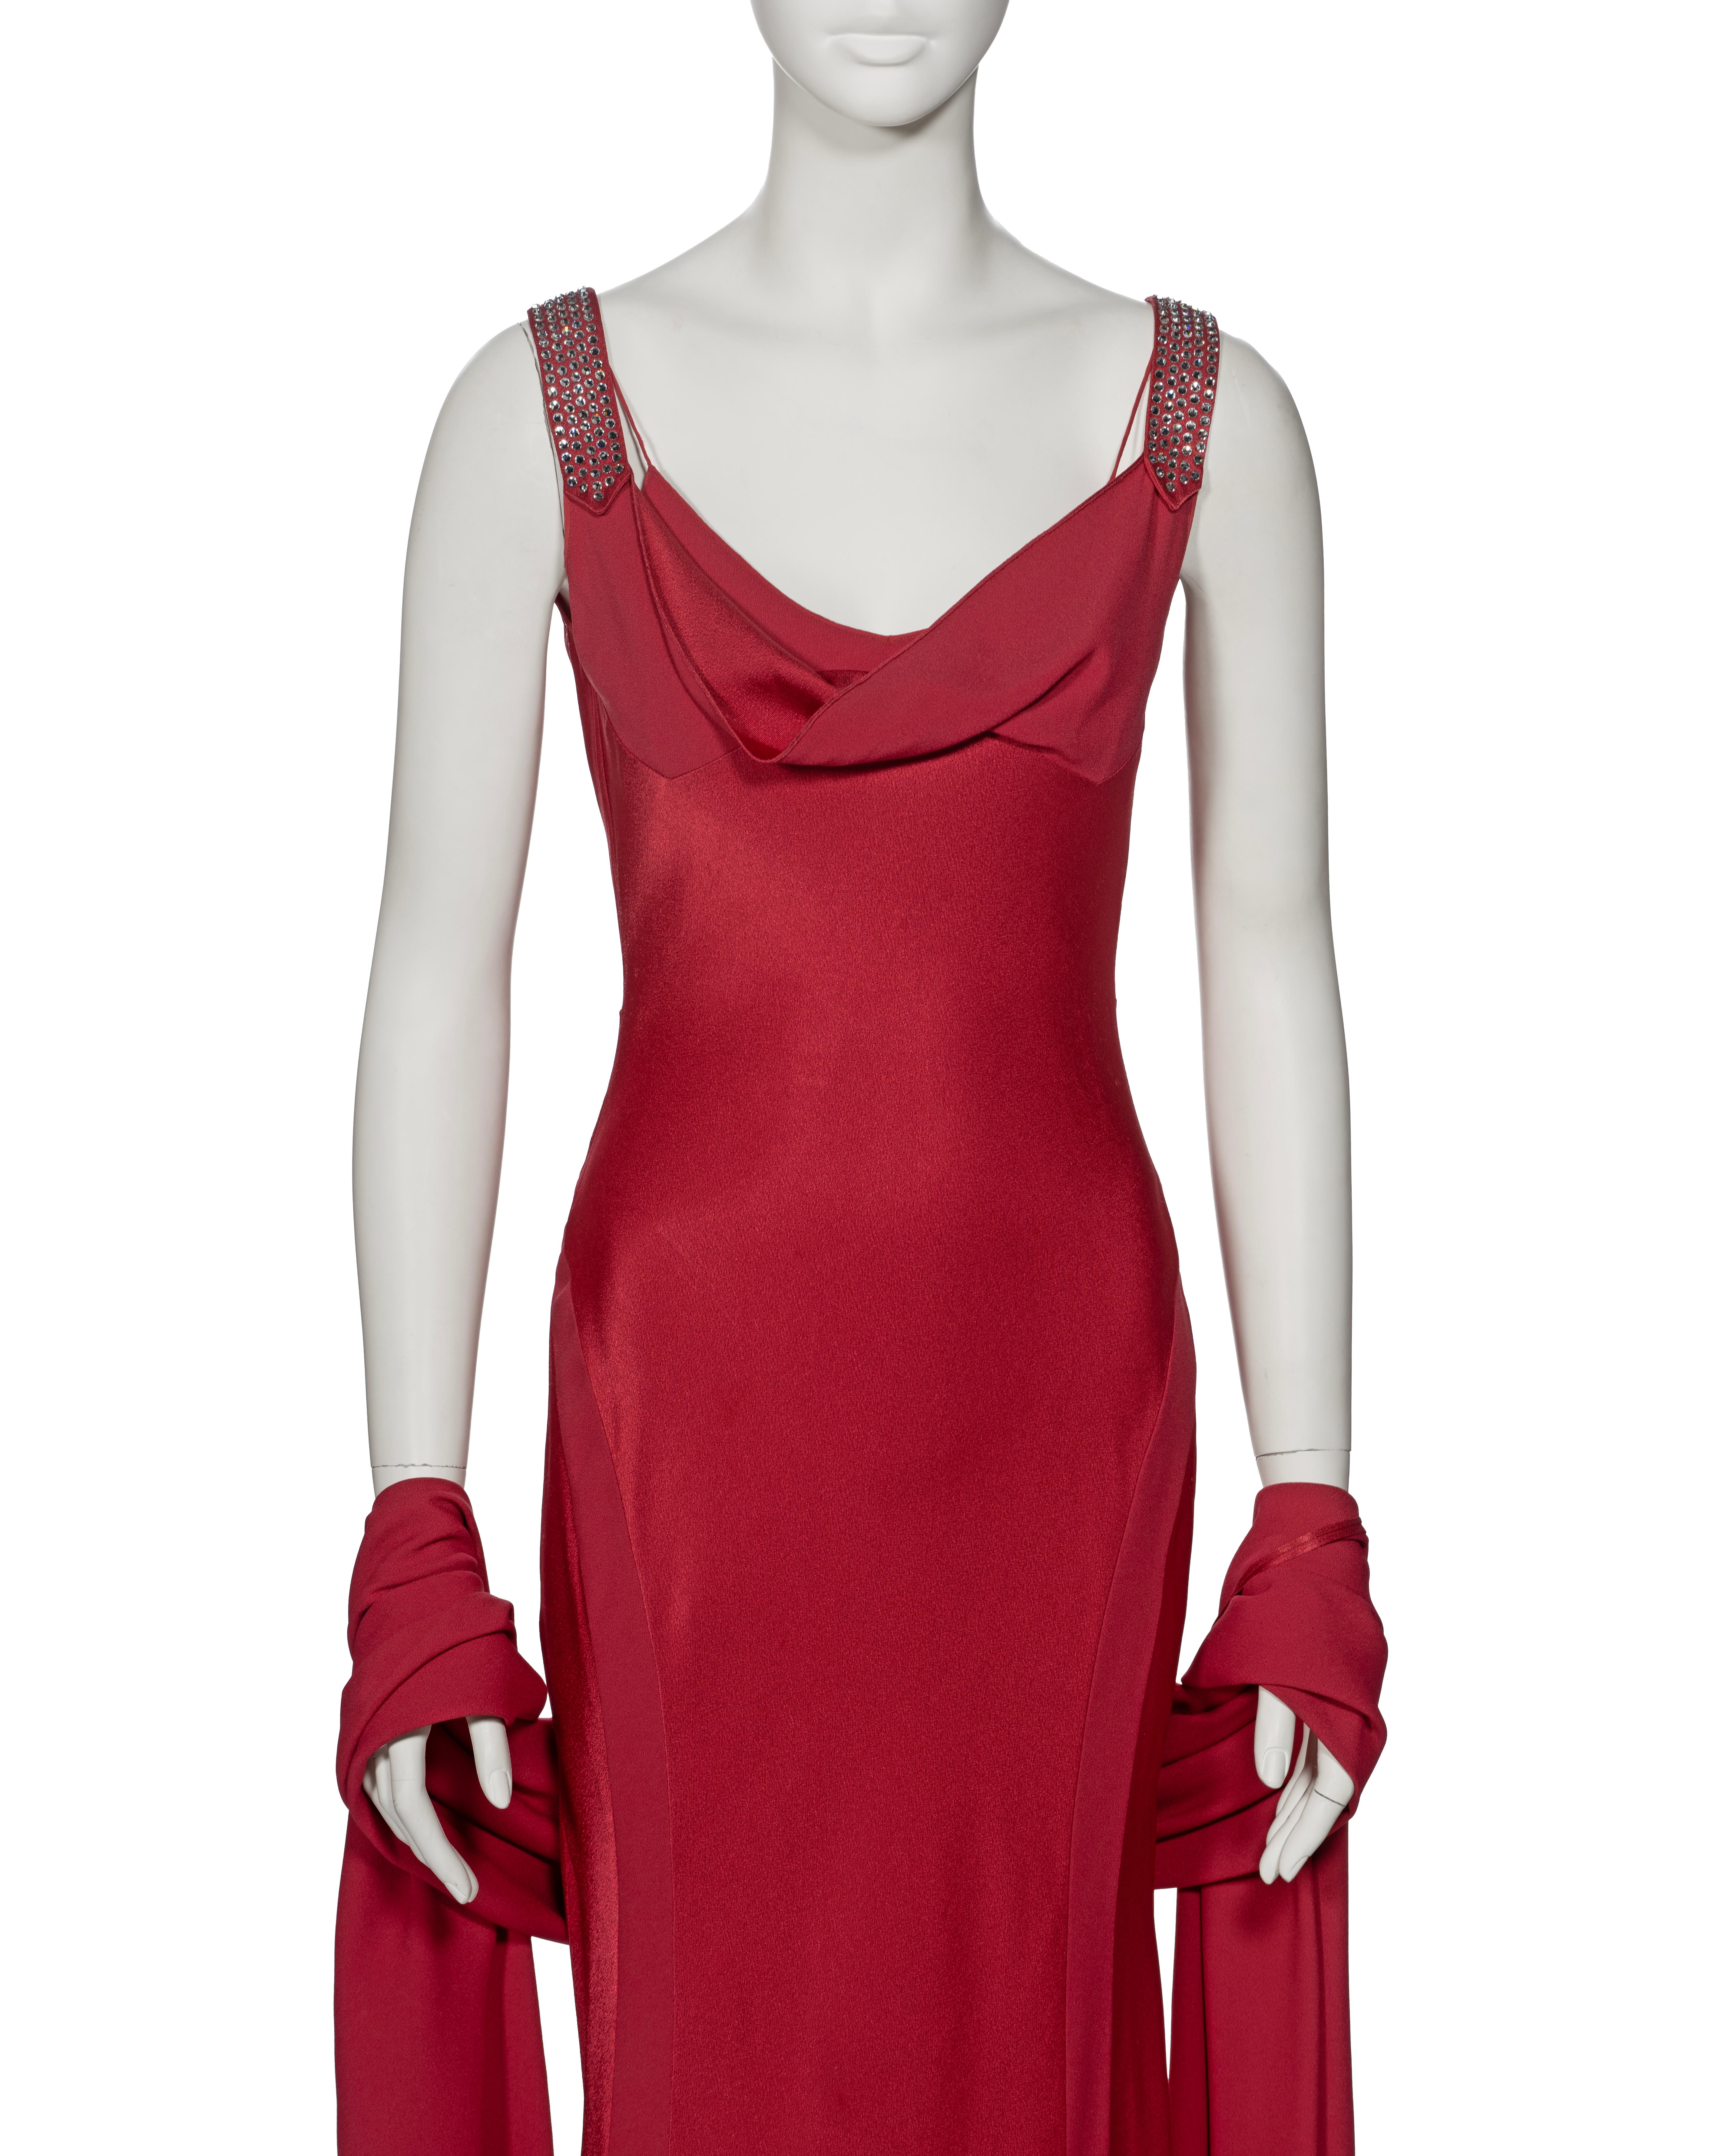 Women's John Galliano Crystal Adorned Crimson Satin Evening Dress and Shawl, ss 2001 For Sale